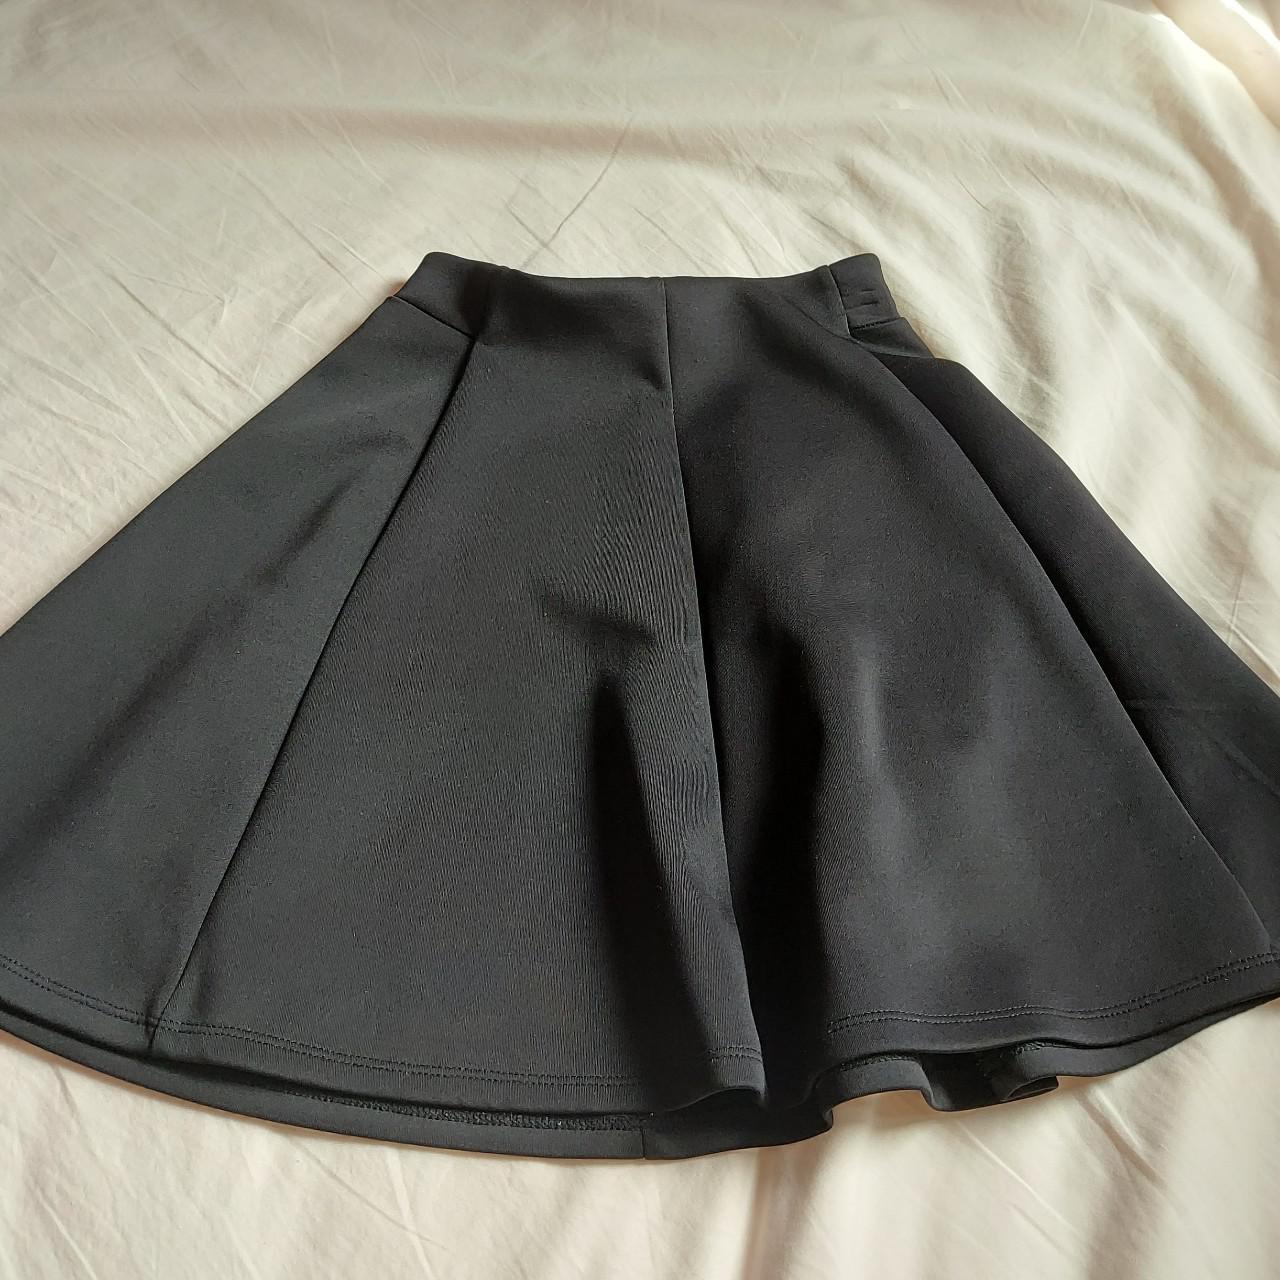 Product Image 1 - Simple black Decree skirt size